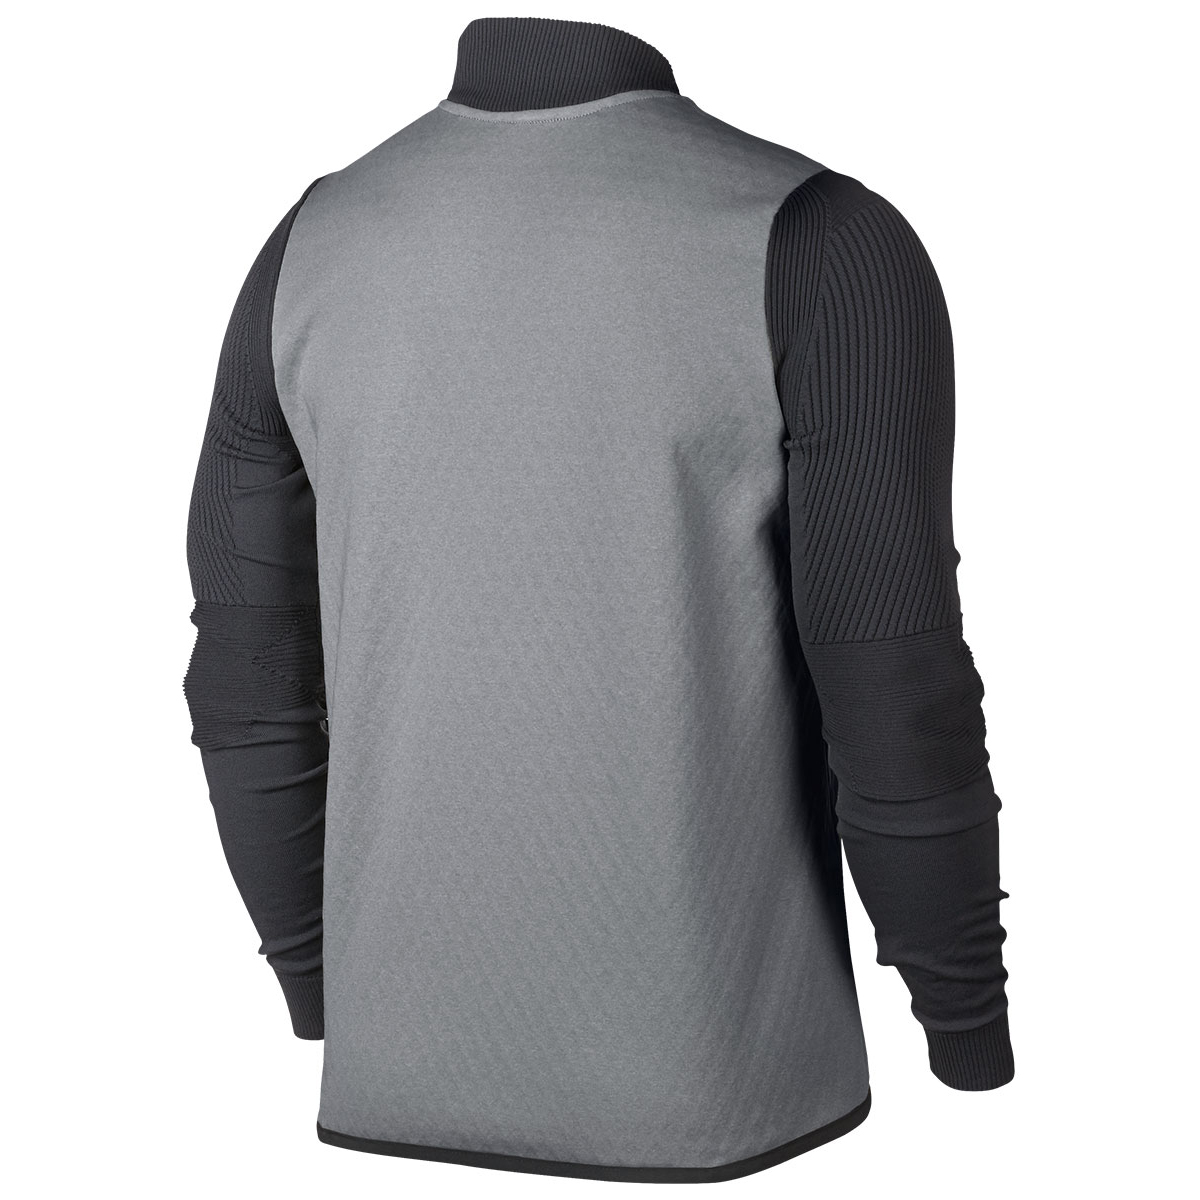 Nike Golf Tech Sphere Knit Crew Sweater | Online Golf